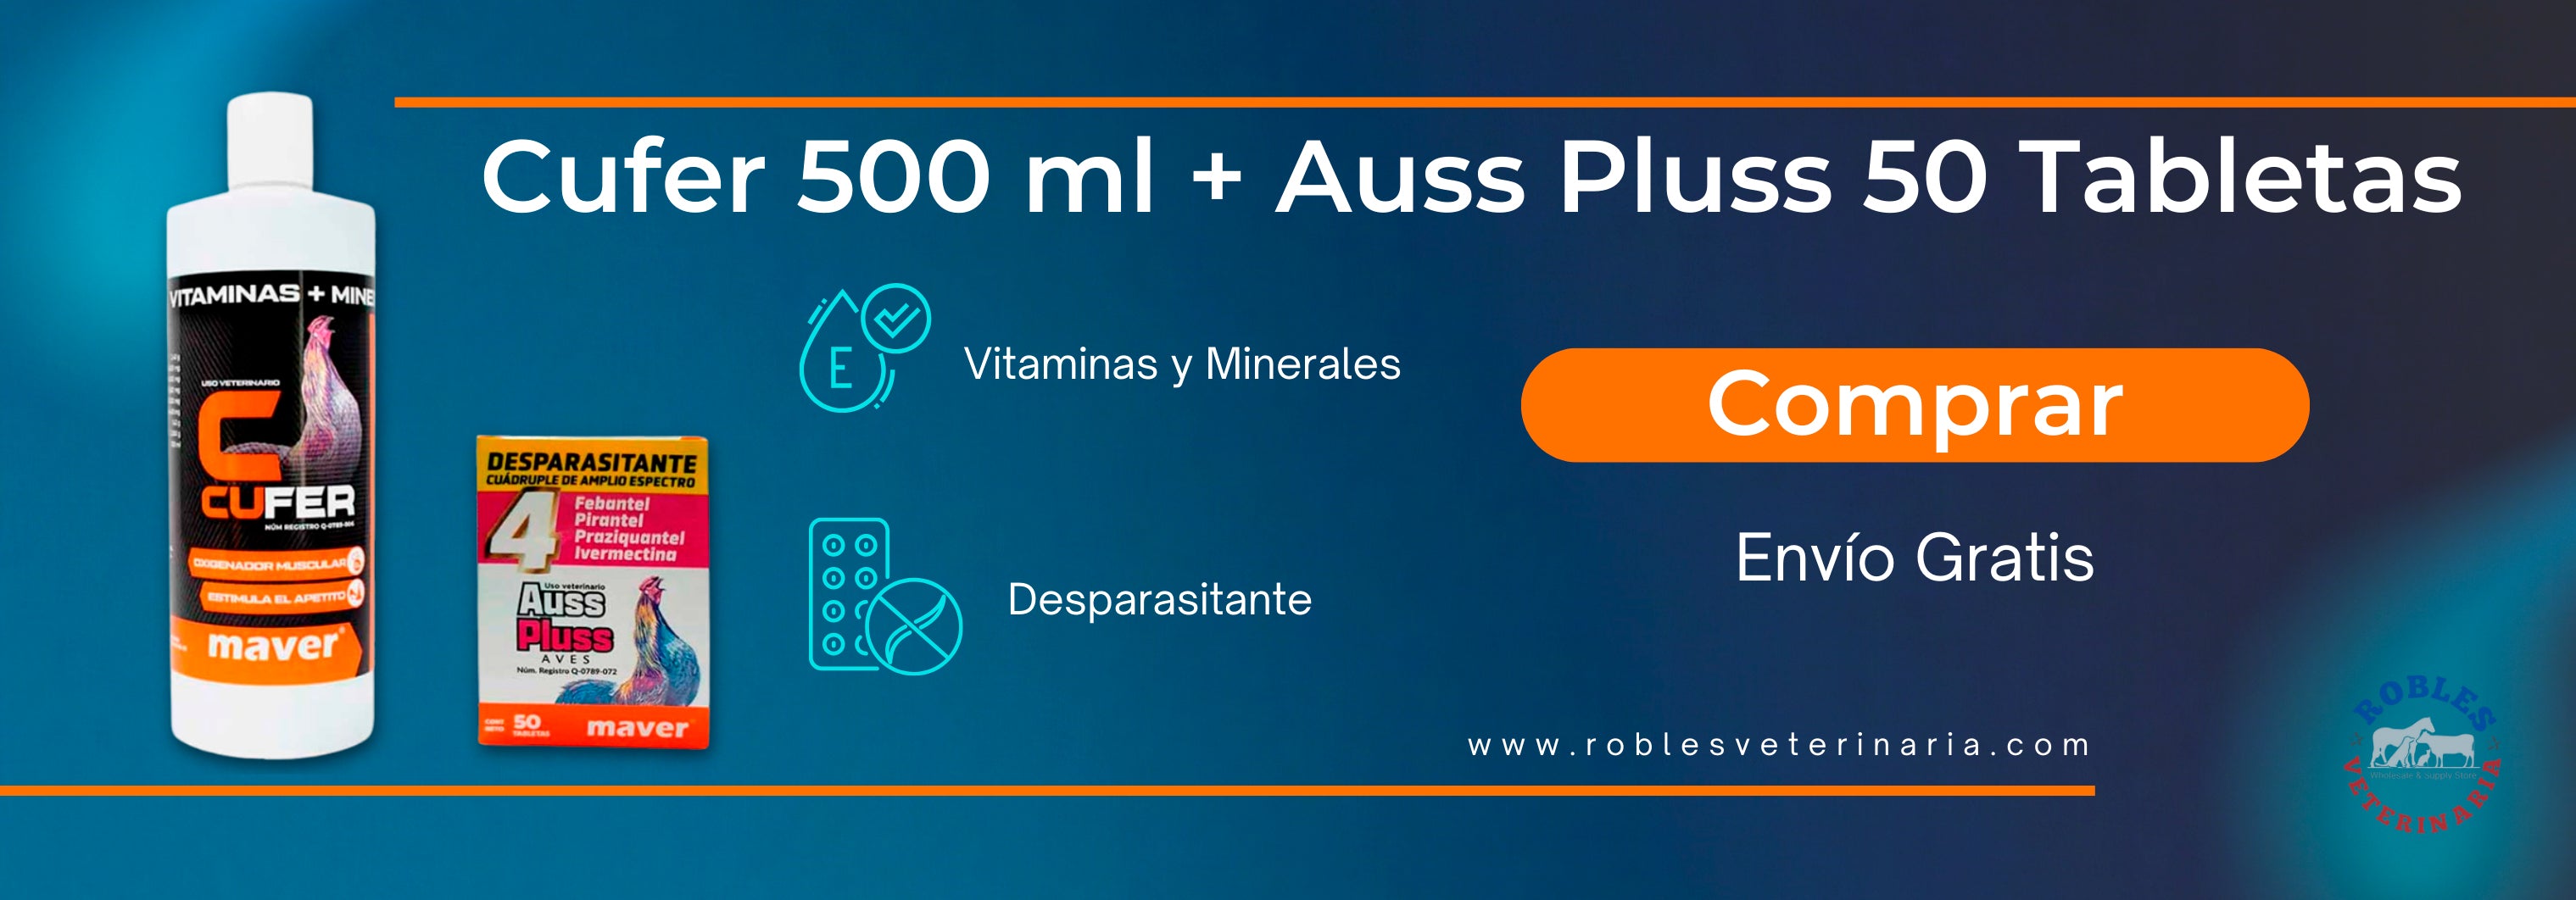 Cufer 500 ml + Auss Pluss 50 tabletas | Robles Veterinaria